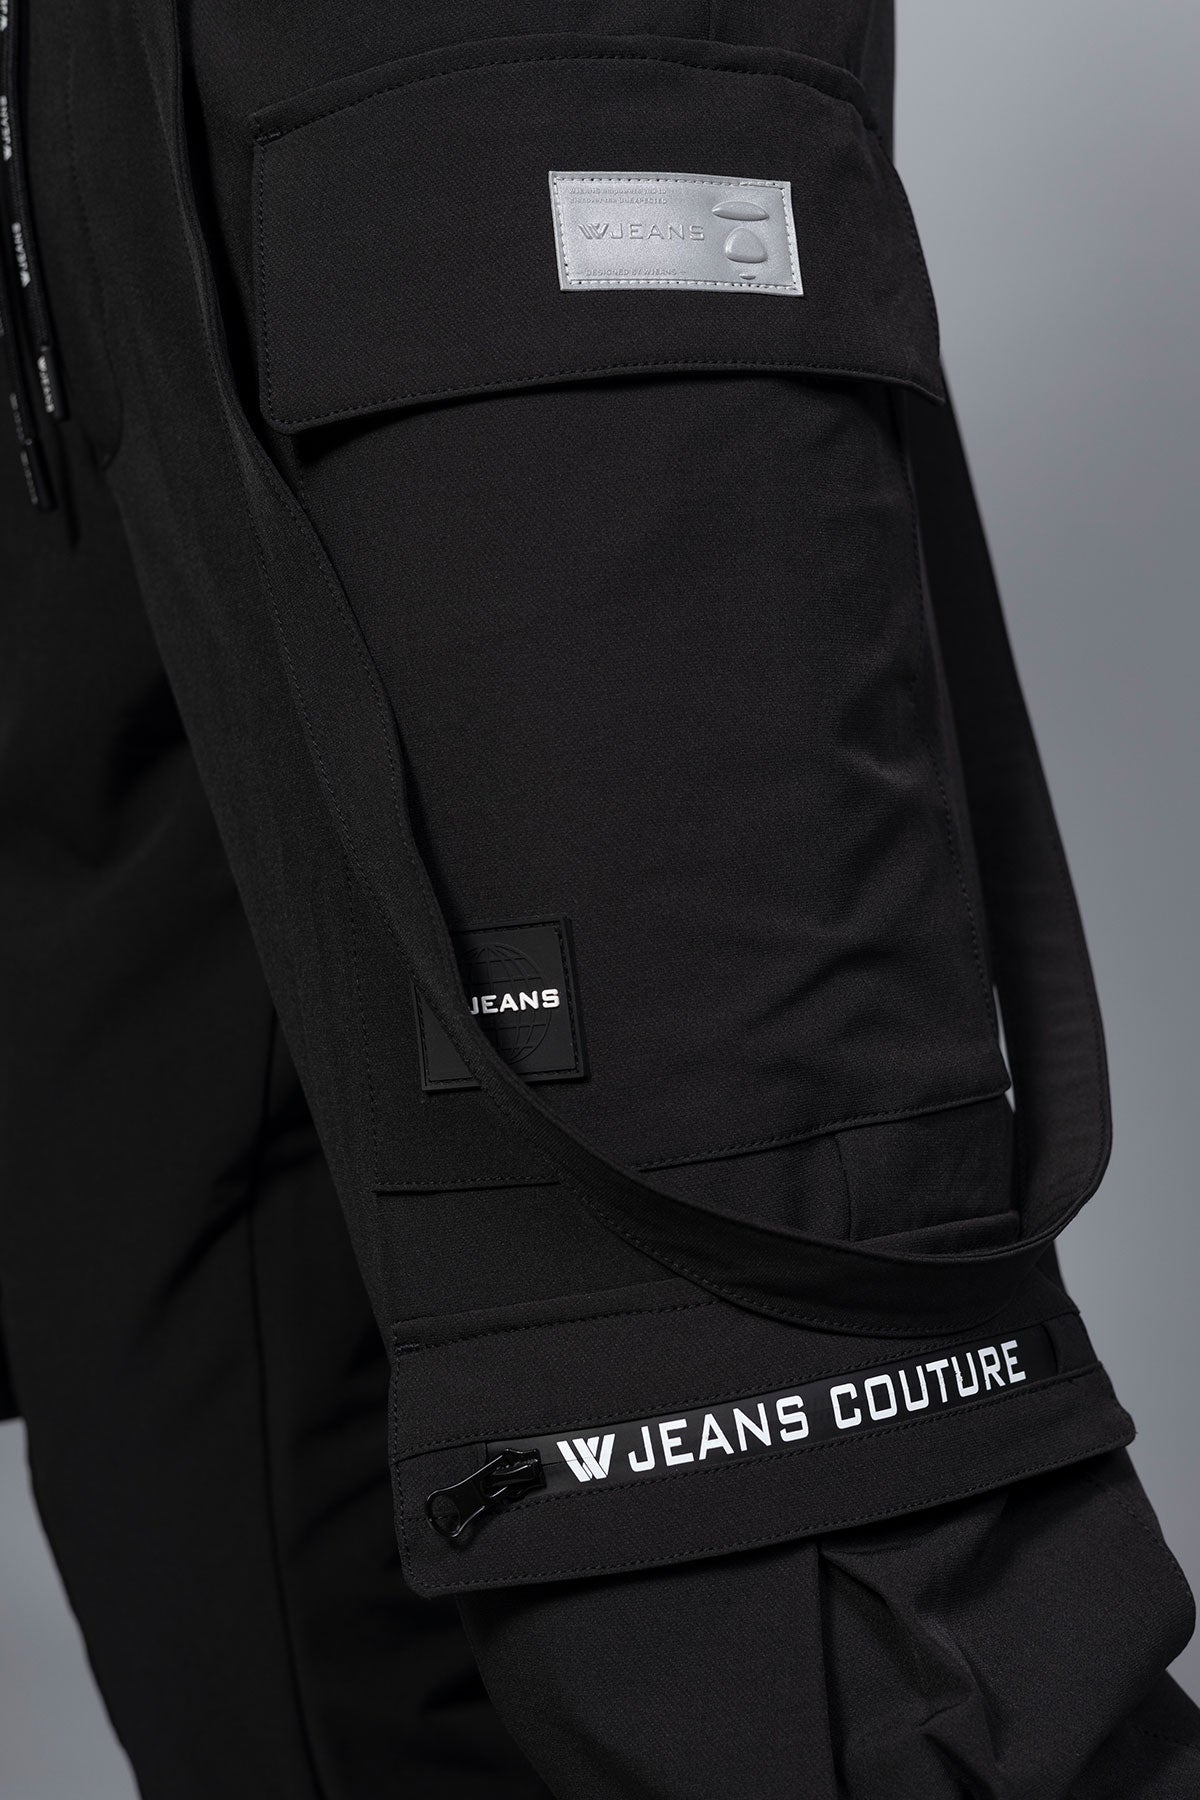 Wjeans מכנסי דגמ"ח ניילון Infinity בצבע שחור לגברים-W Jeans-XS-נאקו